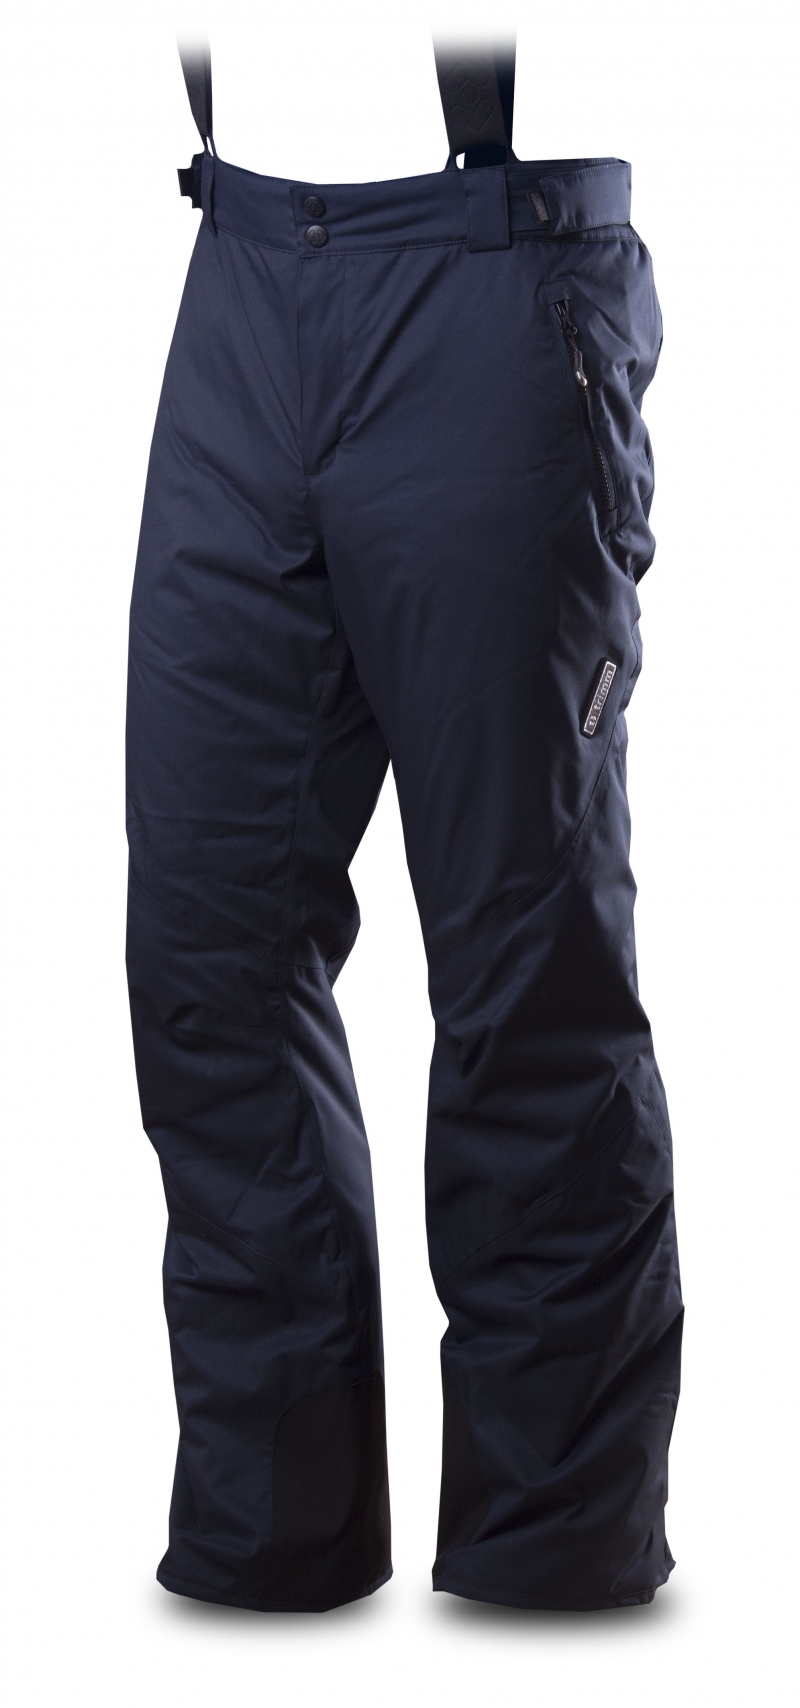 Pánské lyžařské kalhoty TRIMM Derryl navy Velikost: XL